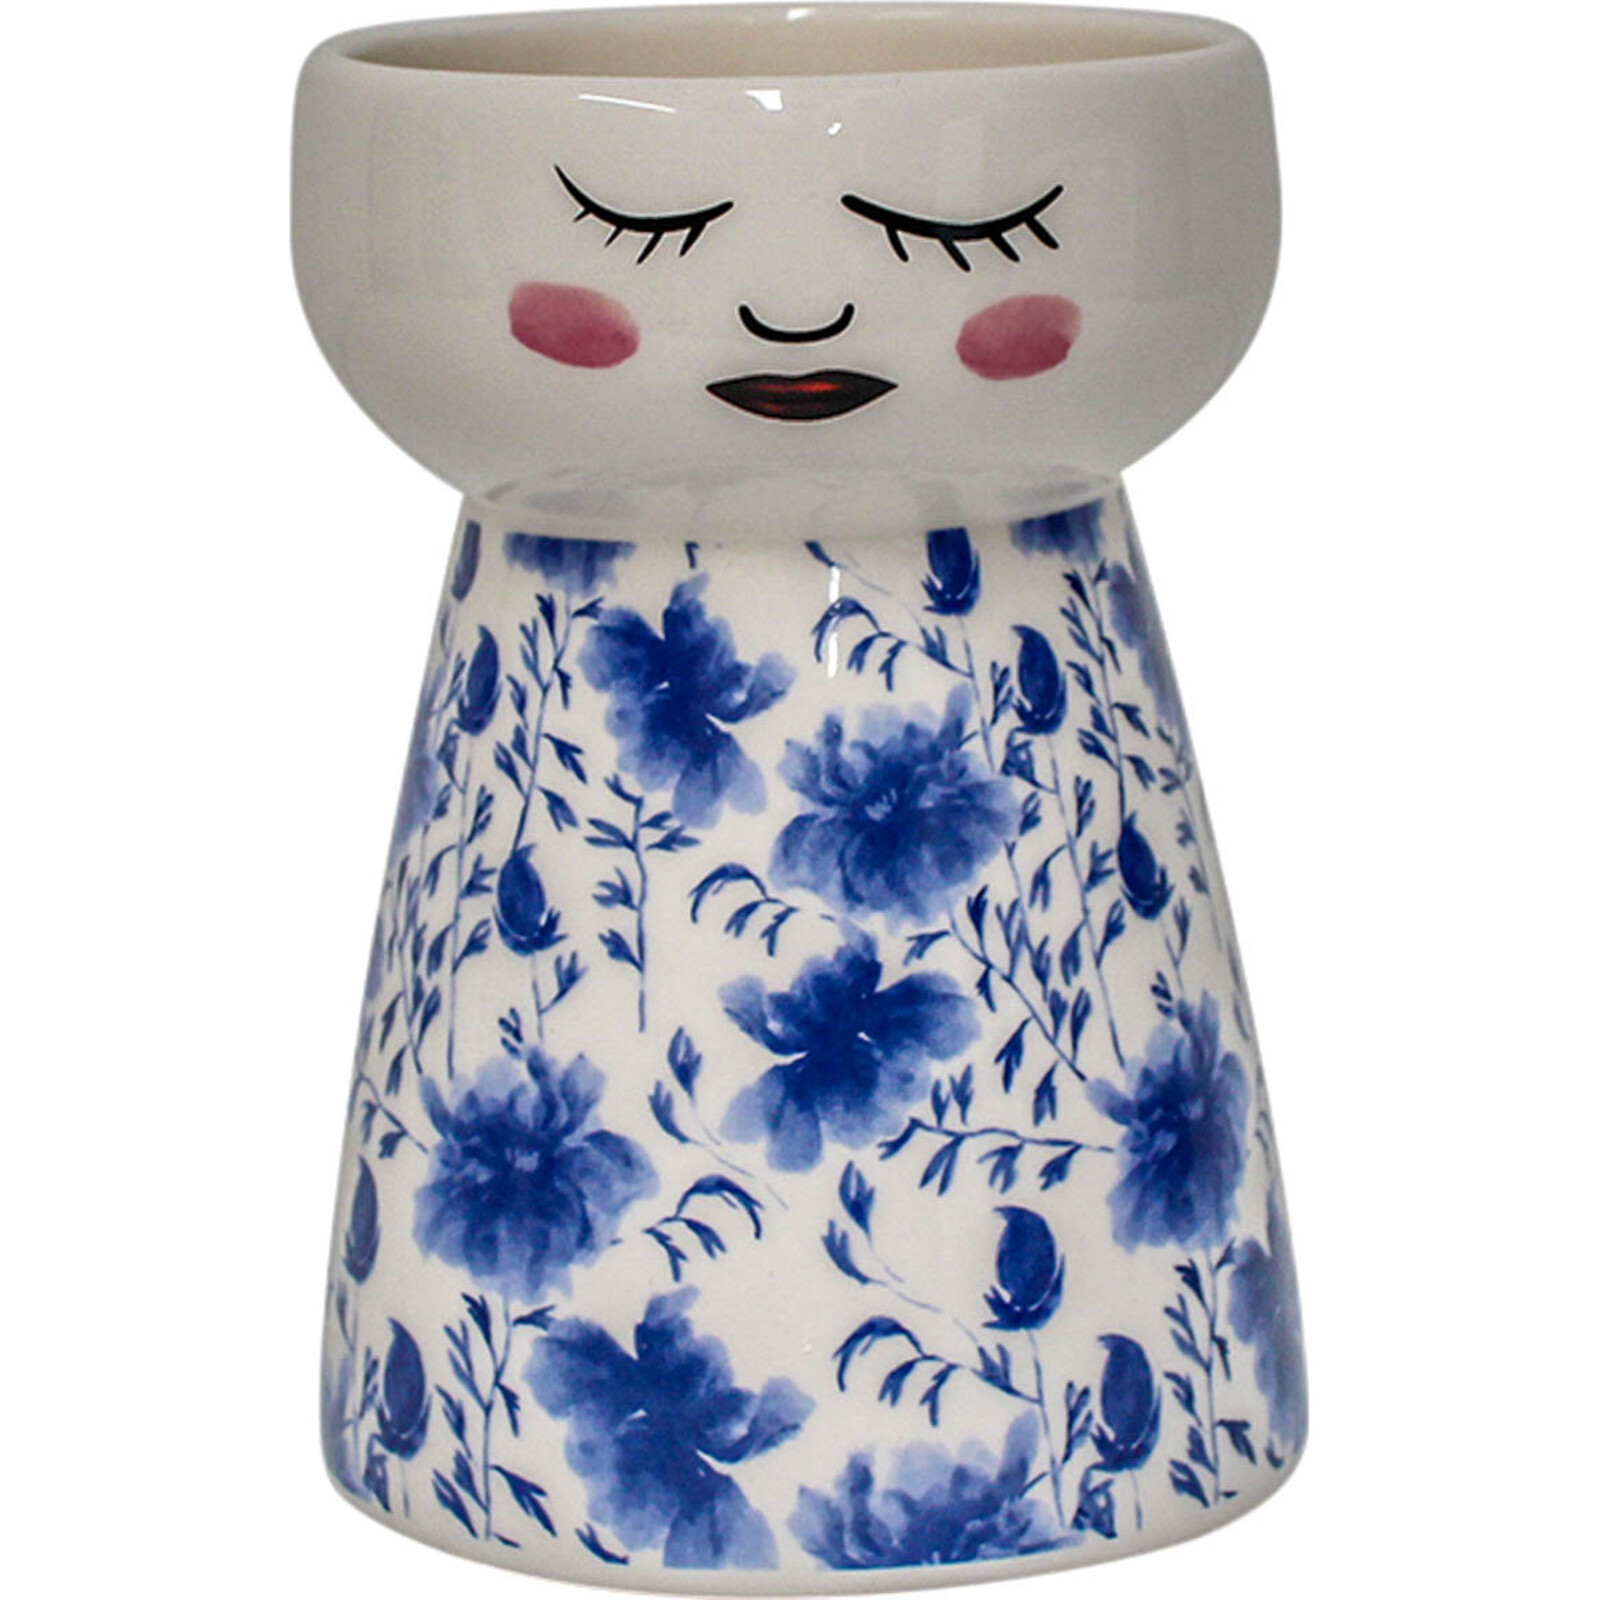 Ceramic Doll Vase Japanese Floral